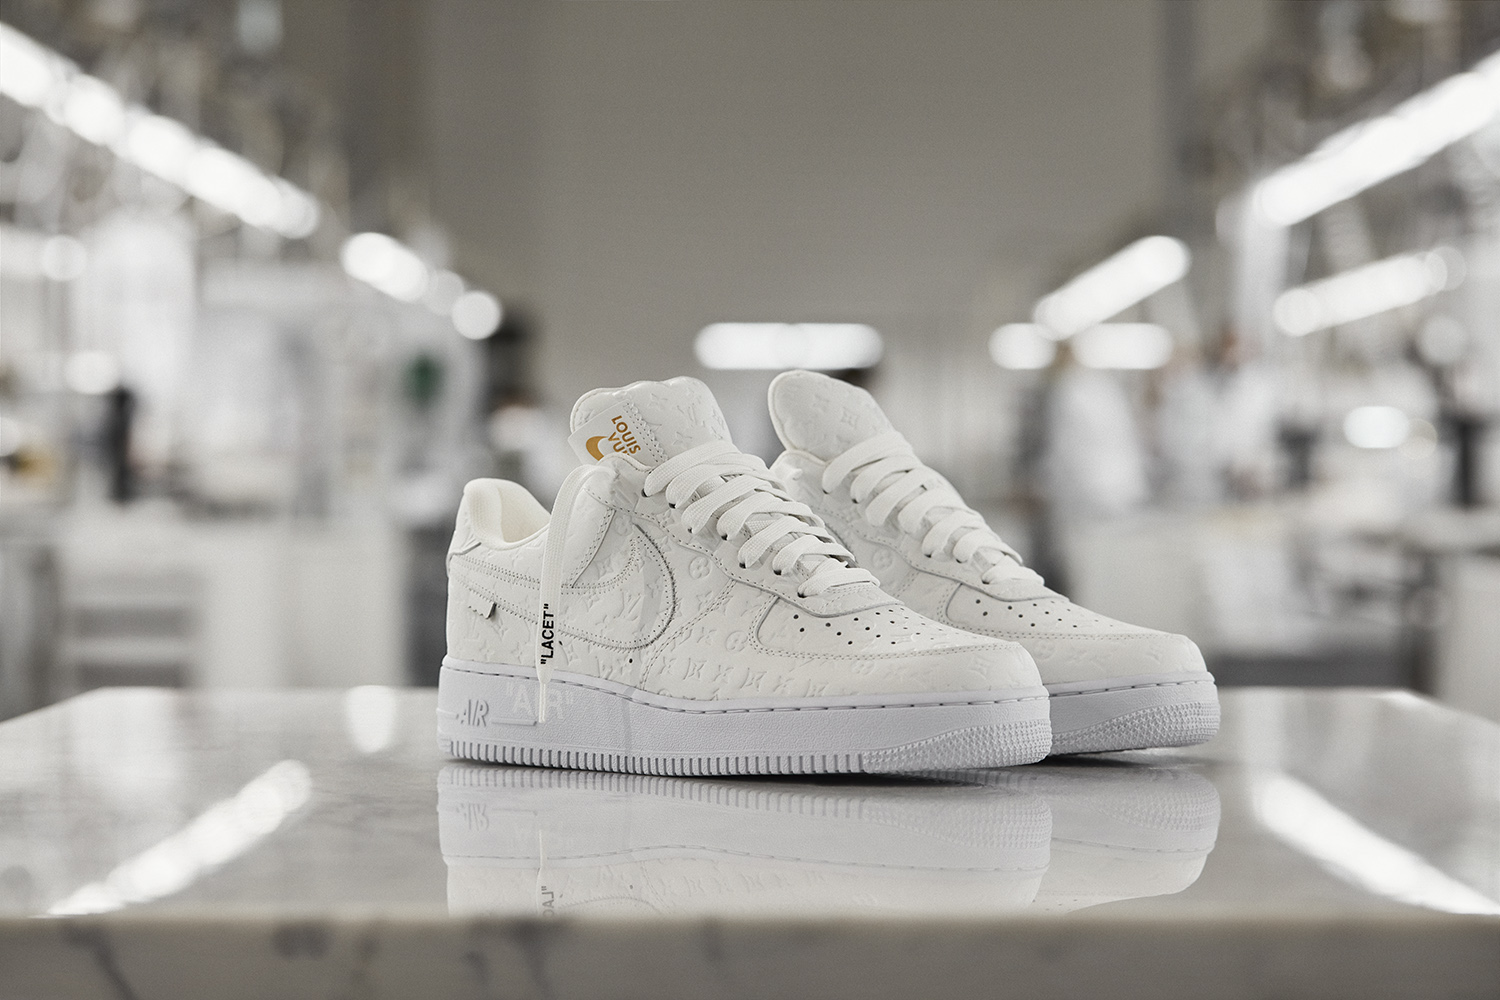 Louis Vuitton celebrates “Nike's Air Force 1 by Virgil Abloh